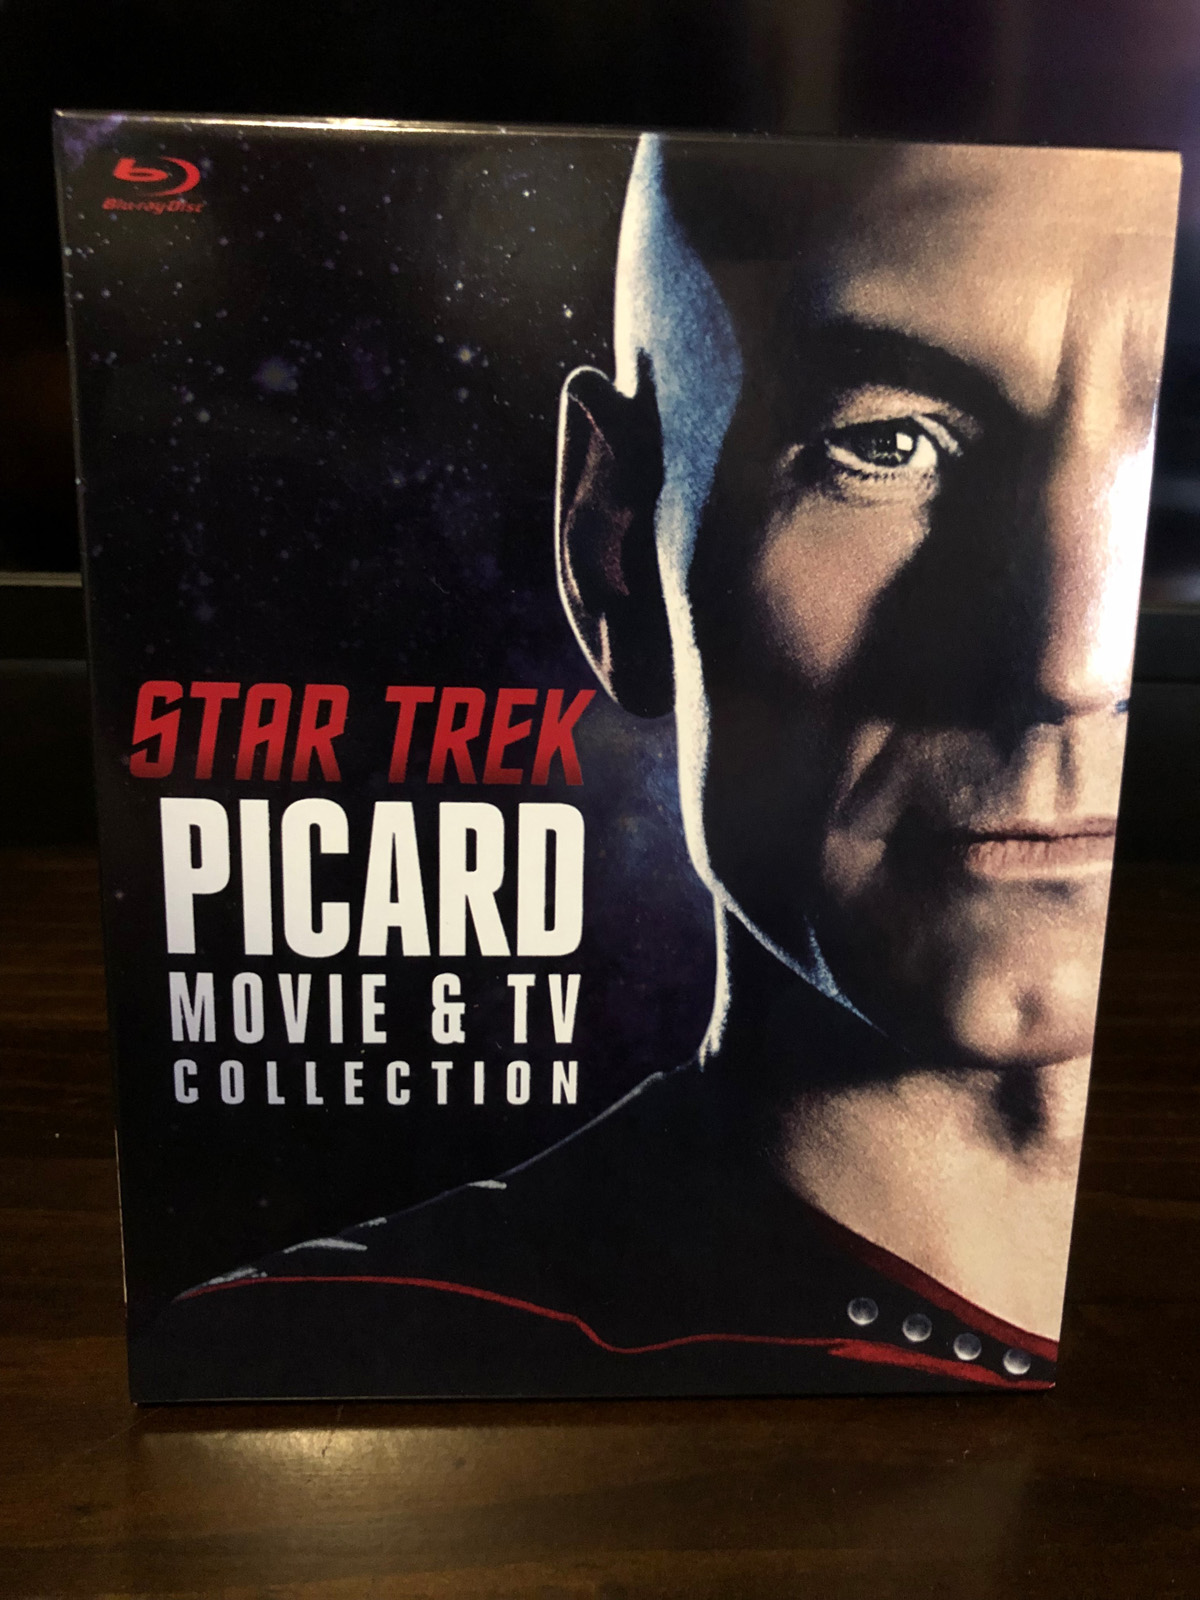 Star Trek Picard Movie & TV Collection